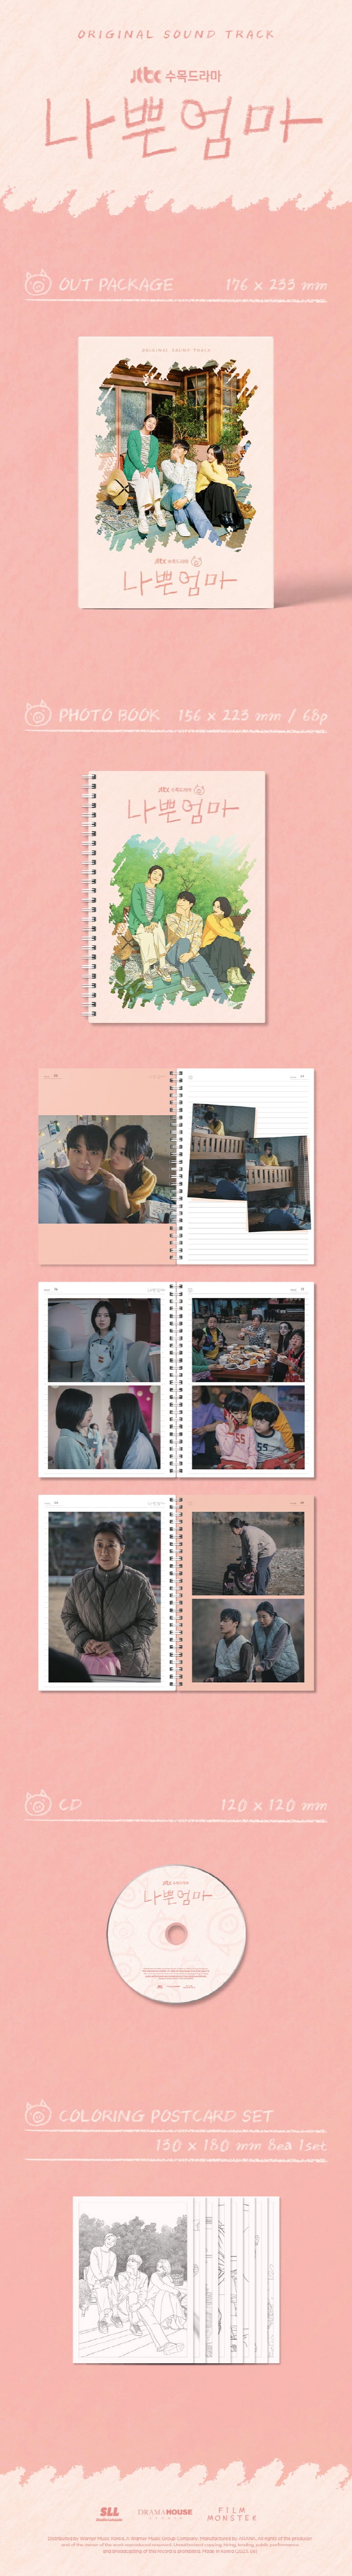 JTBC Wednesday-Thursday drama 'Bad Mother' OST album release The OST album of the JTBC Wednesday-Thursday drama 'Bad Mothe...